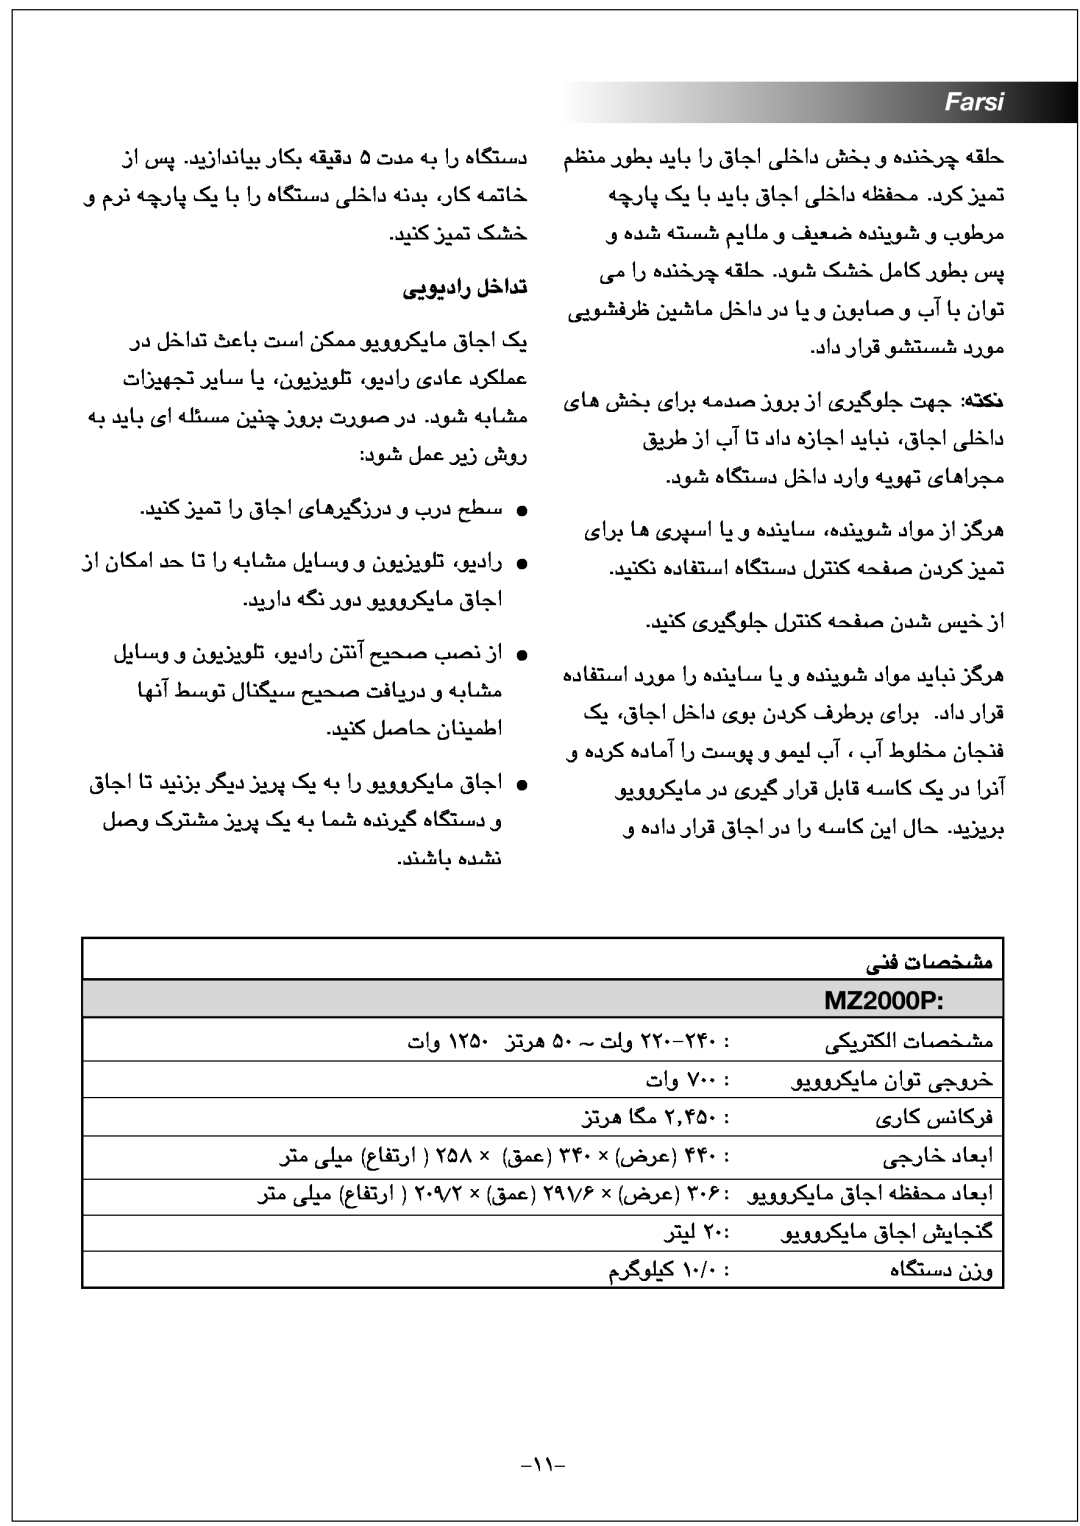 Black & Decker MZ2000P manual ﯽﯾﻮﯾﺩﺍﺭ ﻞﺧﺍﺪﺗ, ﯽﻨﻓ ﺕﺎﺼﺨﺸﻣ, Farsi 